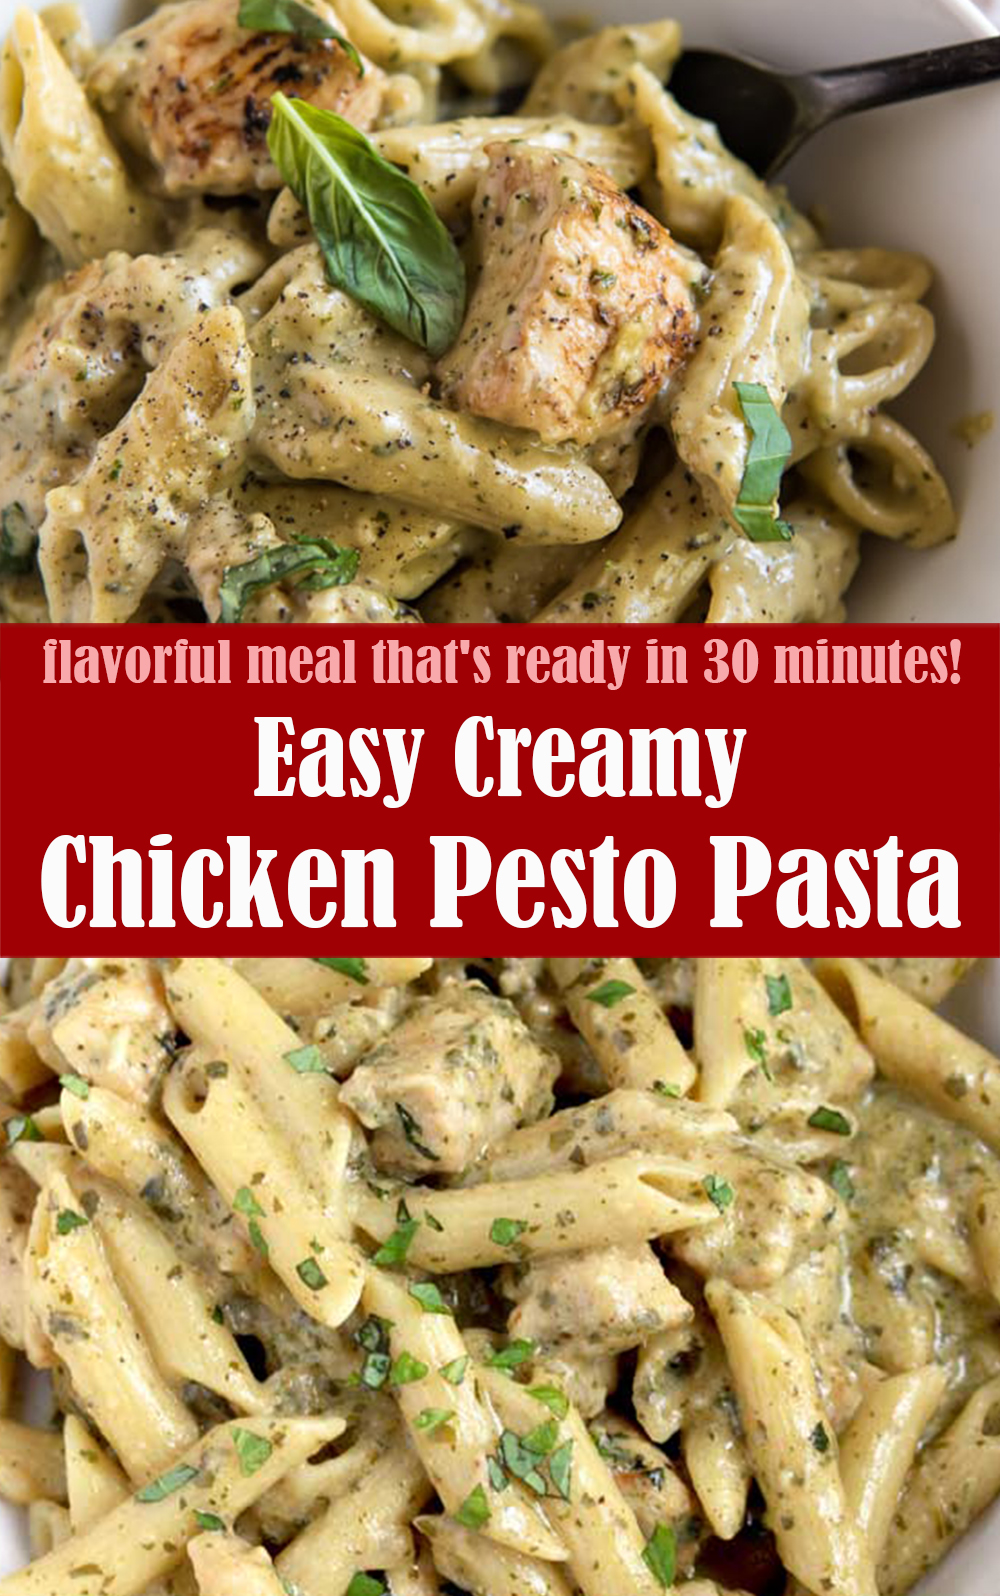 Easy Creamy Chicken Pesto Pasta